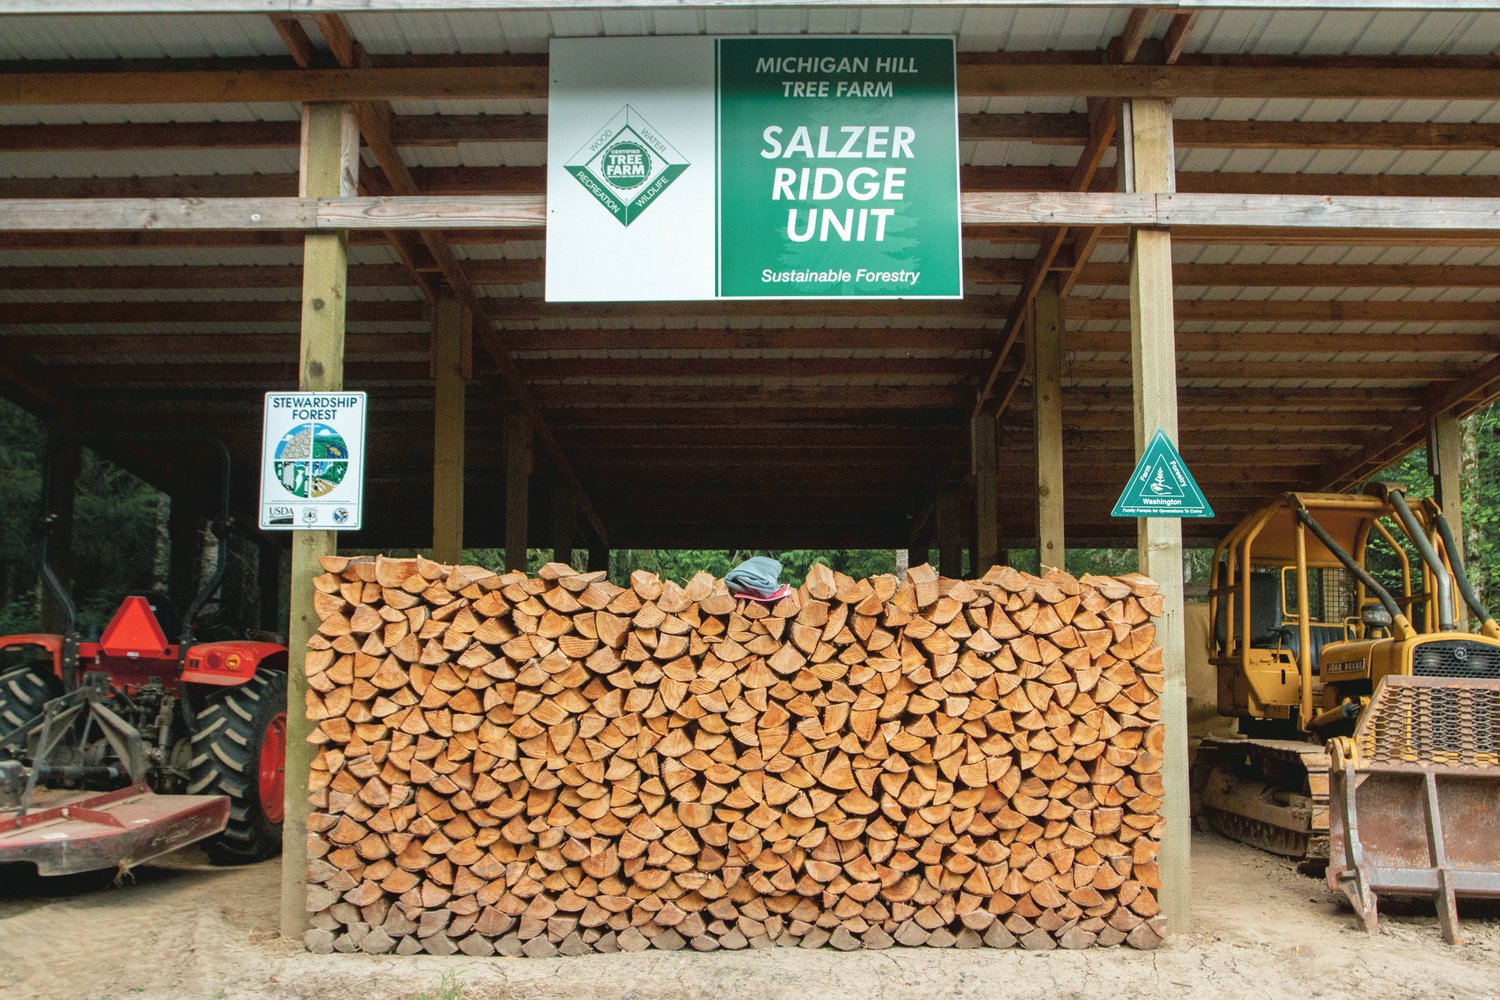 A stack of firewood sits underneath the Salzer Ridge Unit of Michigan Hill Tree Farm Sign